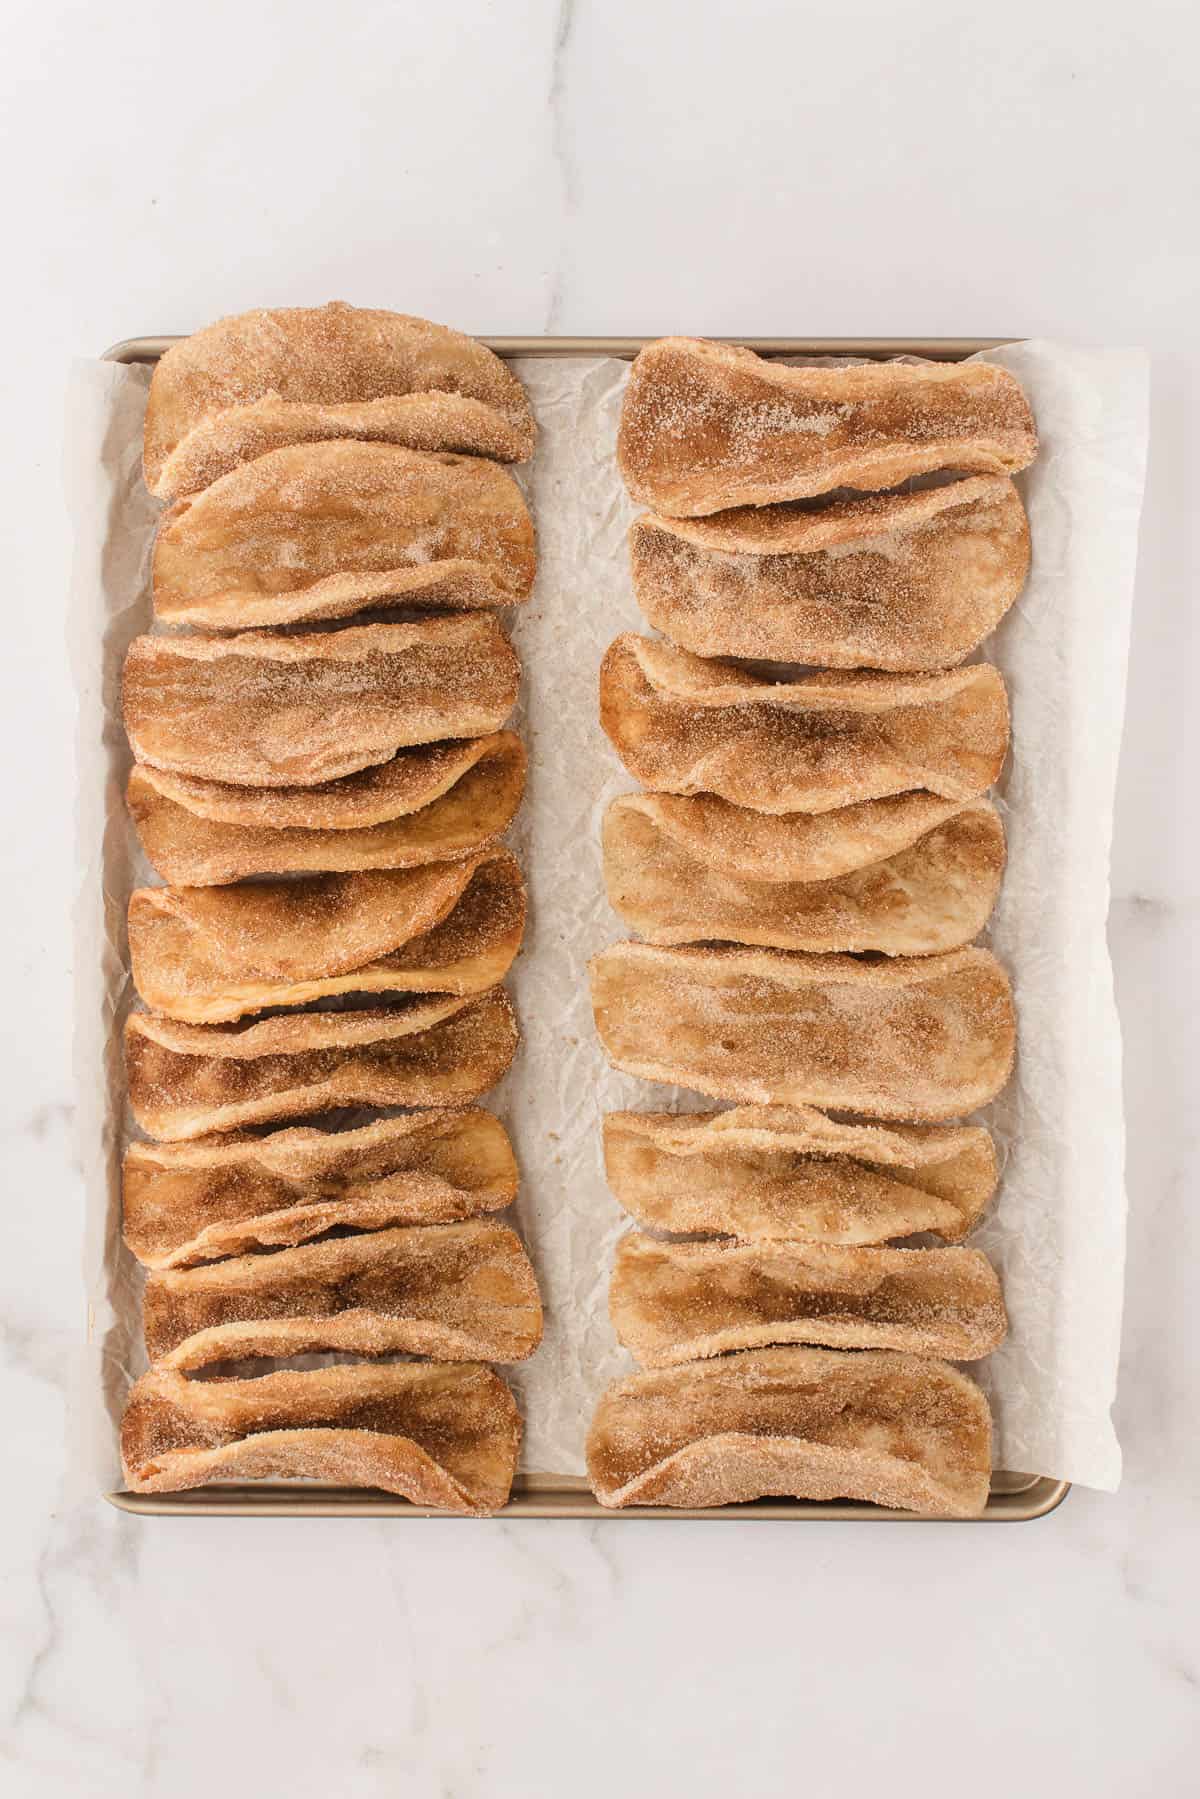 An image of fried tortilla shells coated in cinnamon sugar.